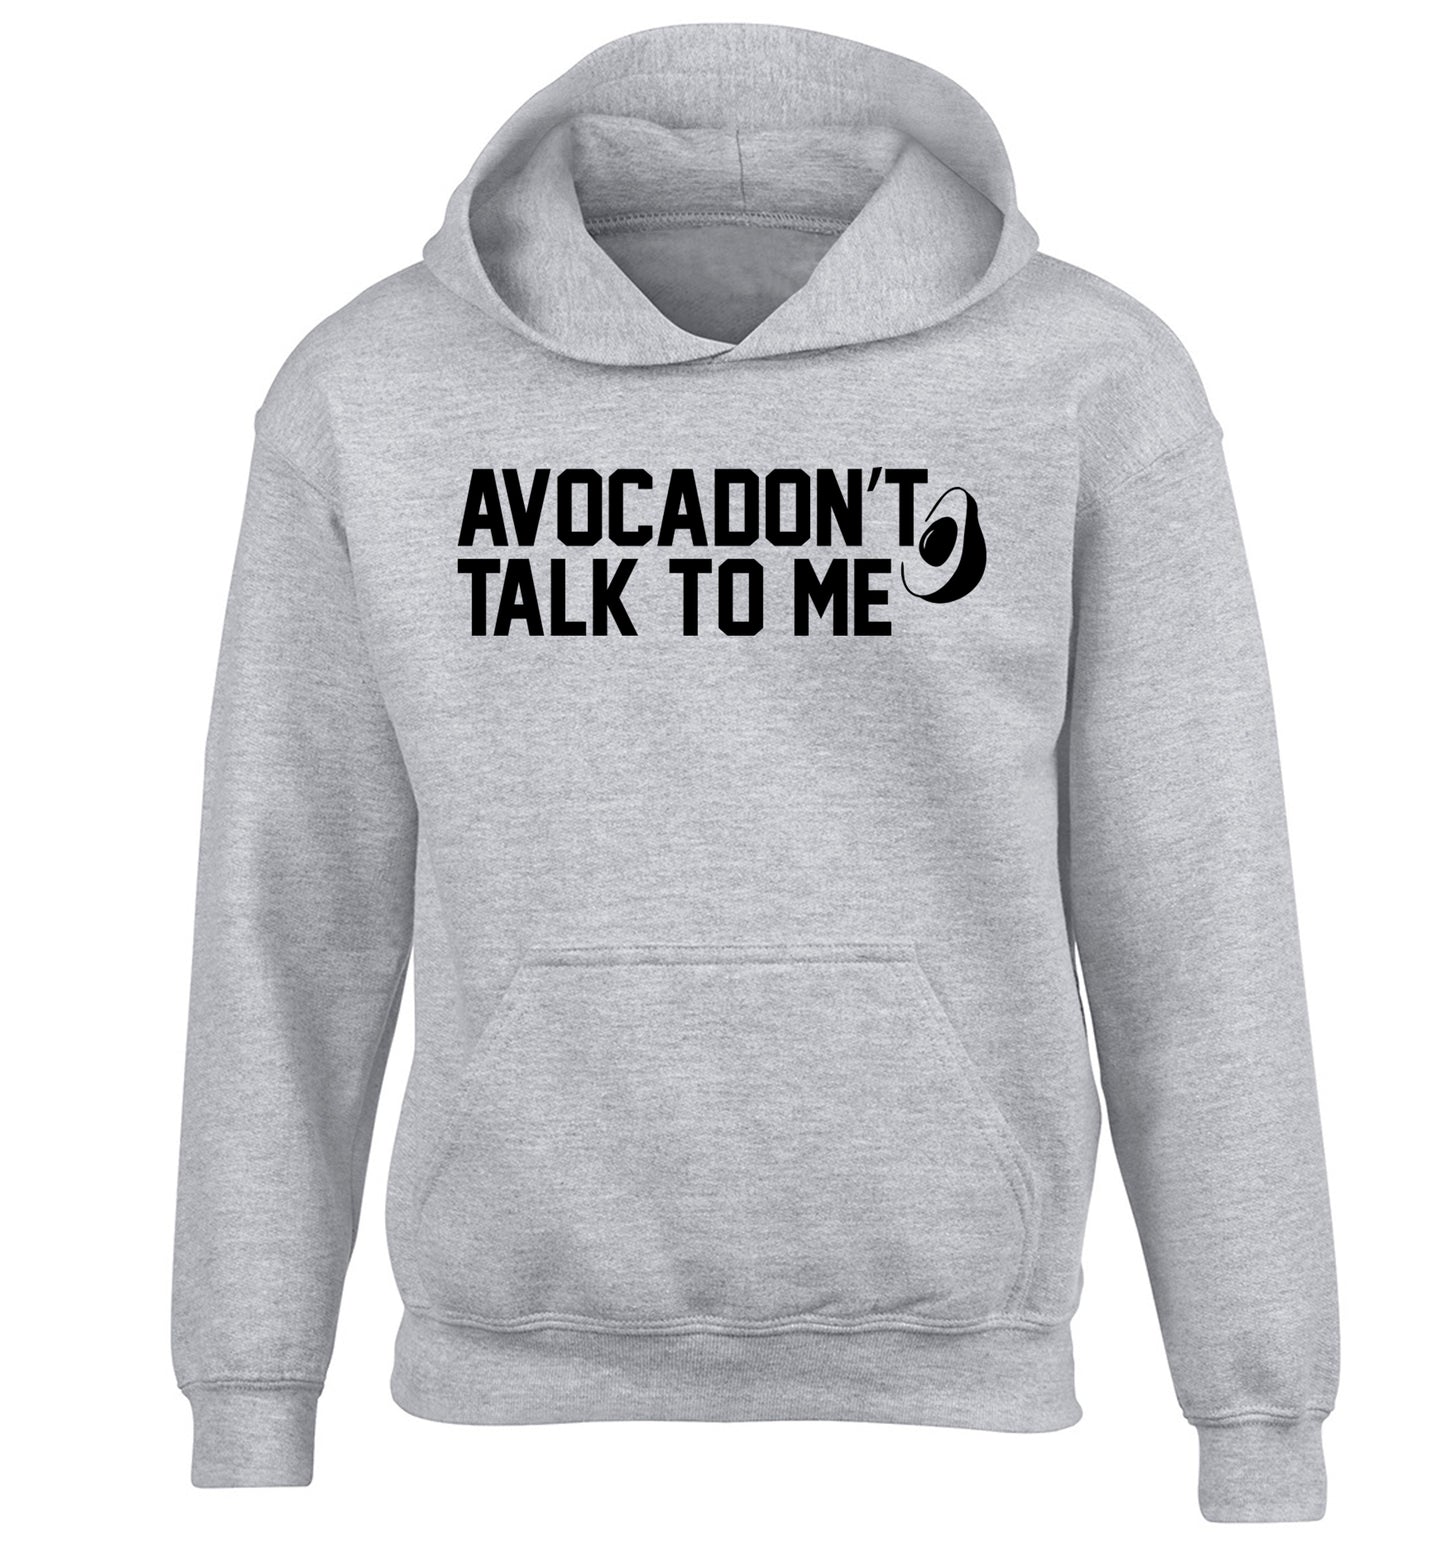 Avocadon't talk to me children's grey hoodie 12-14 Years